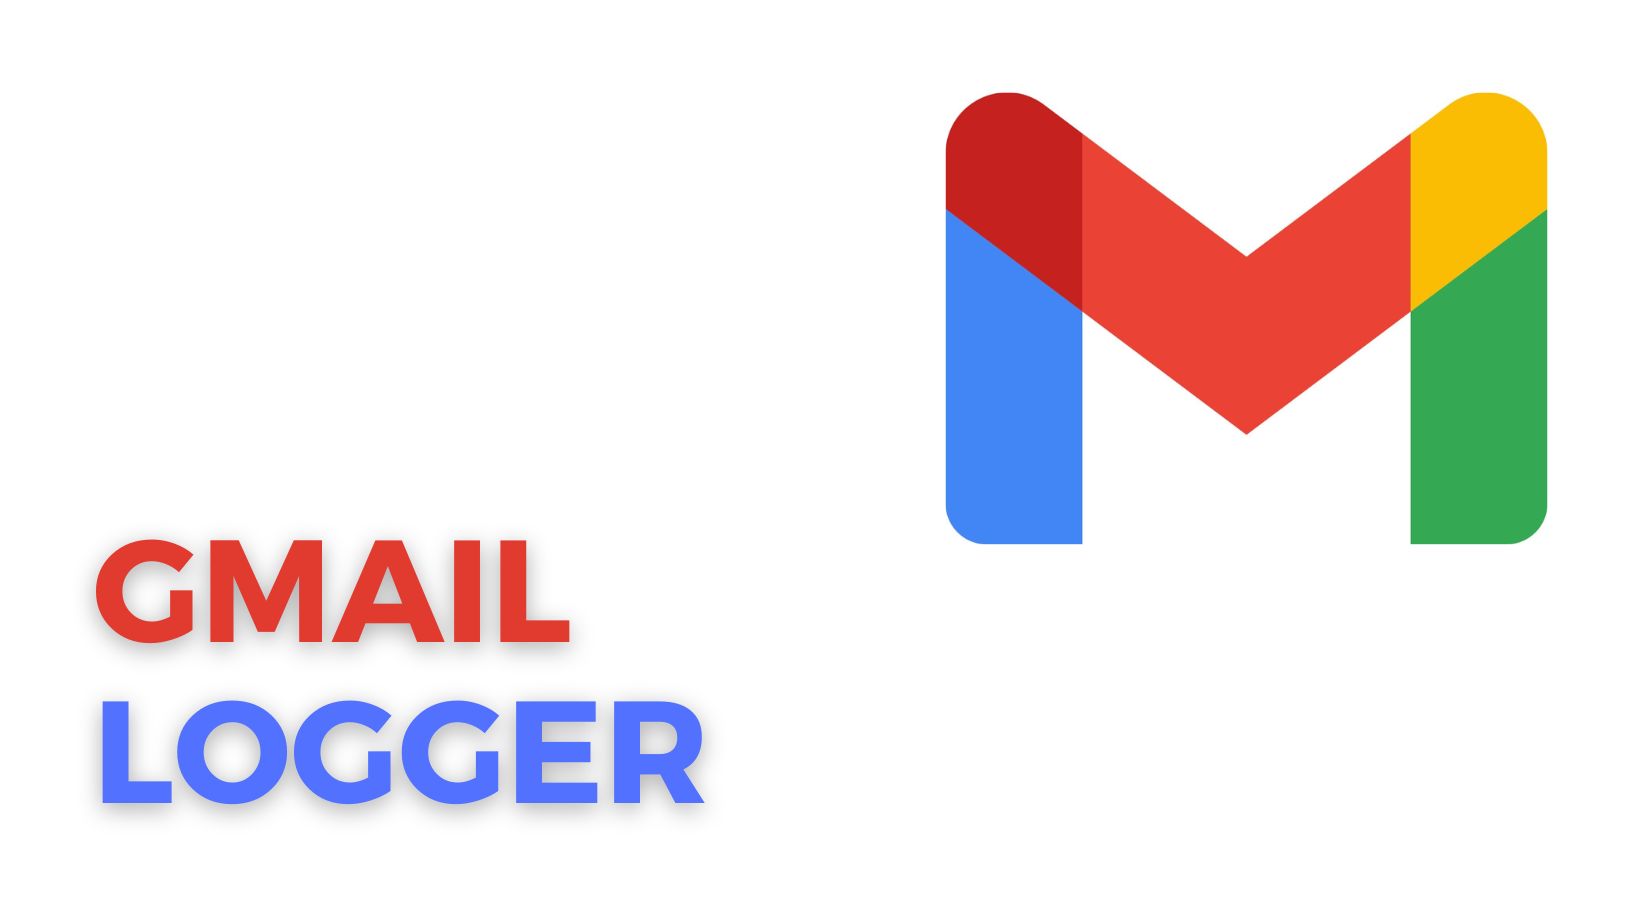 Gmail logger